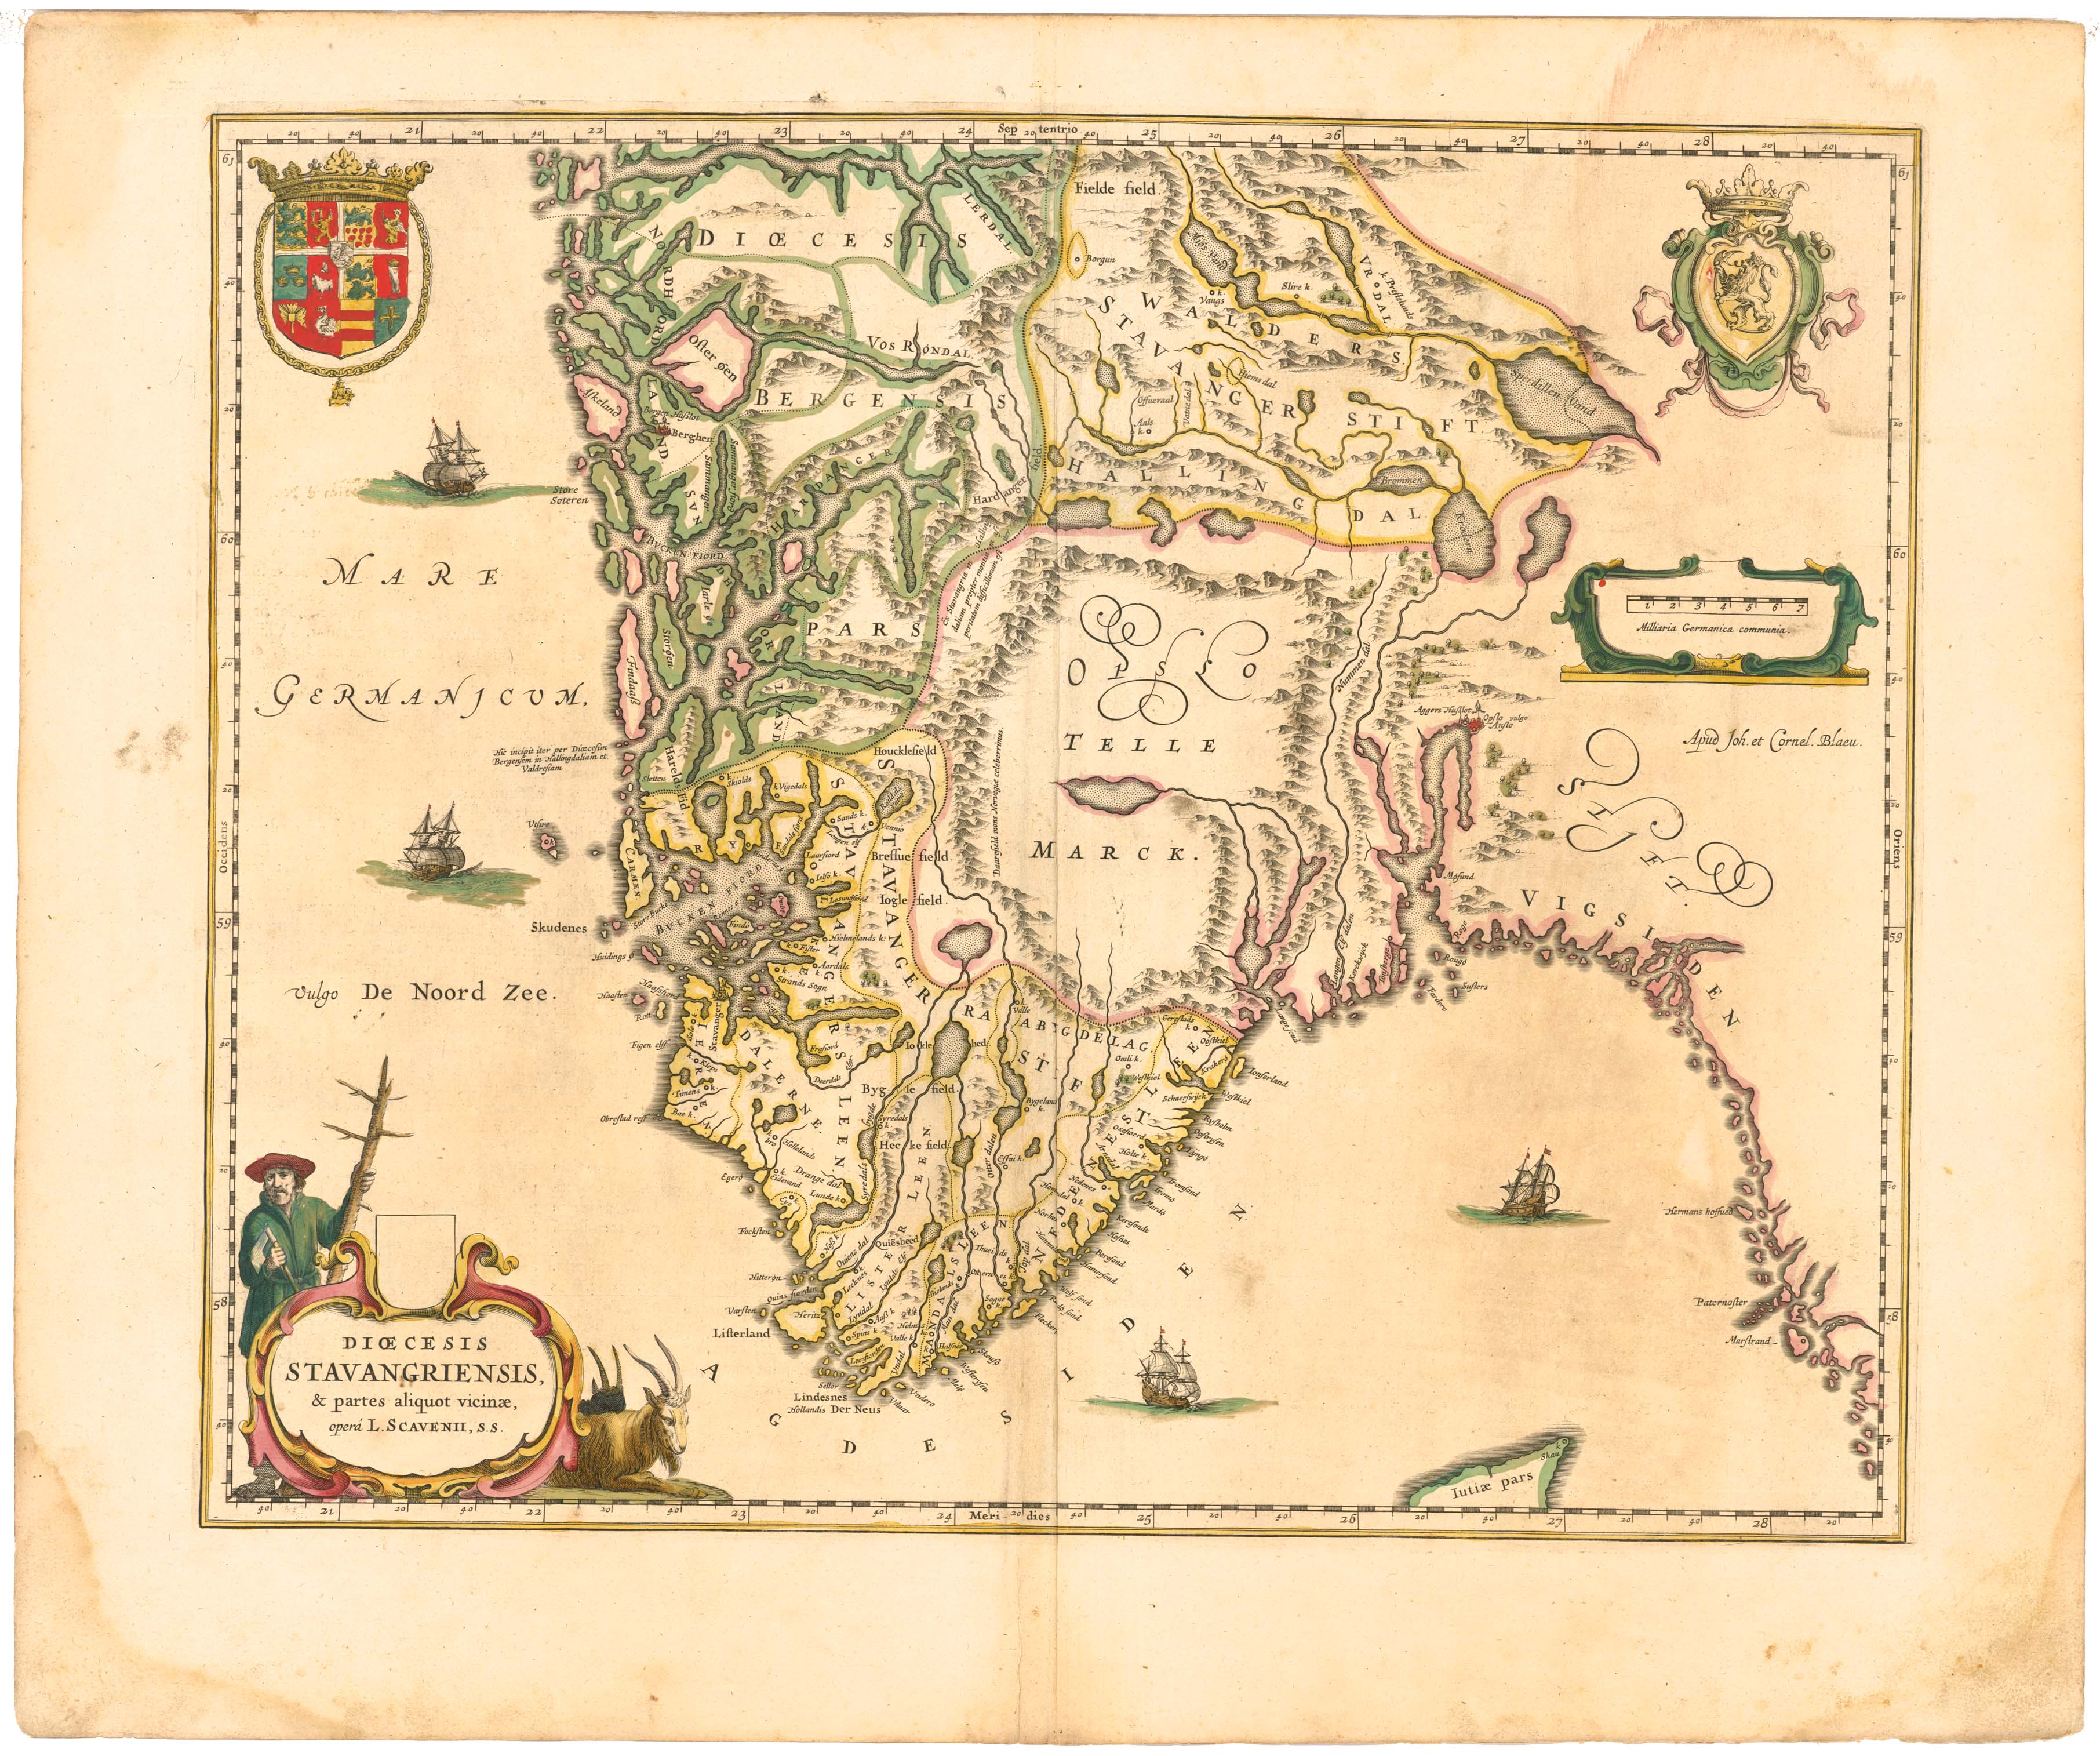 Blaeu 1645 - Diœcesis Stavangriensis & partes aliquot vicinæ